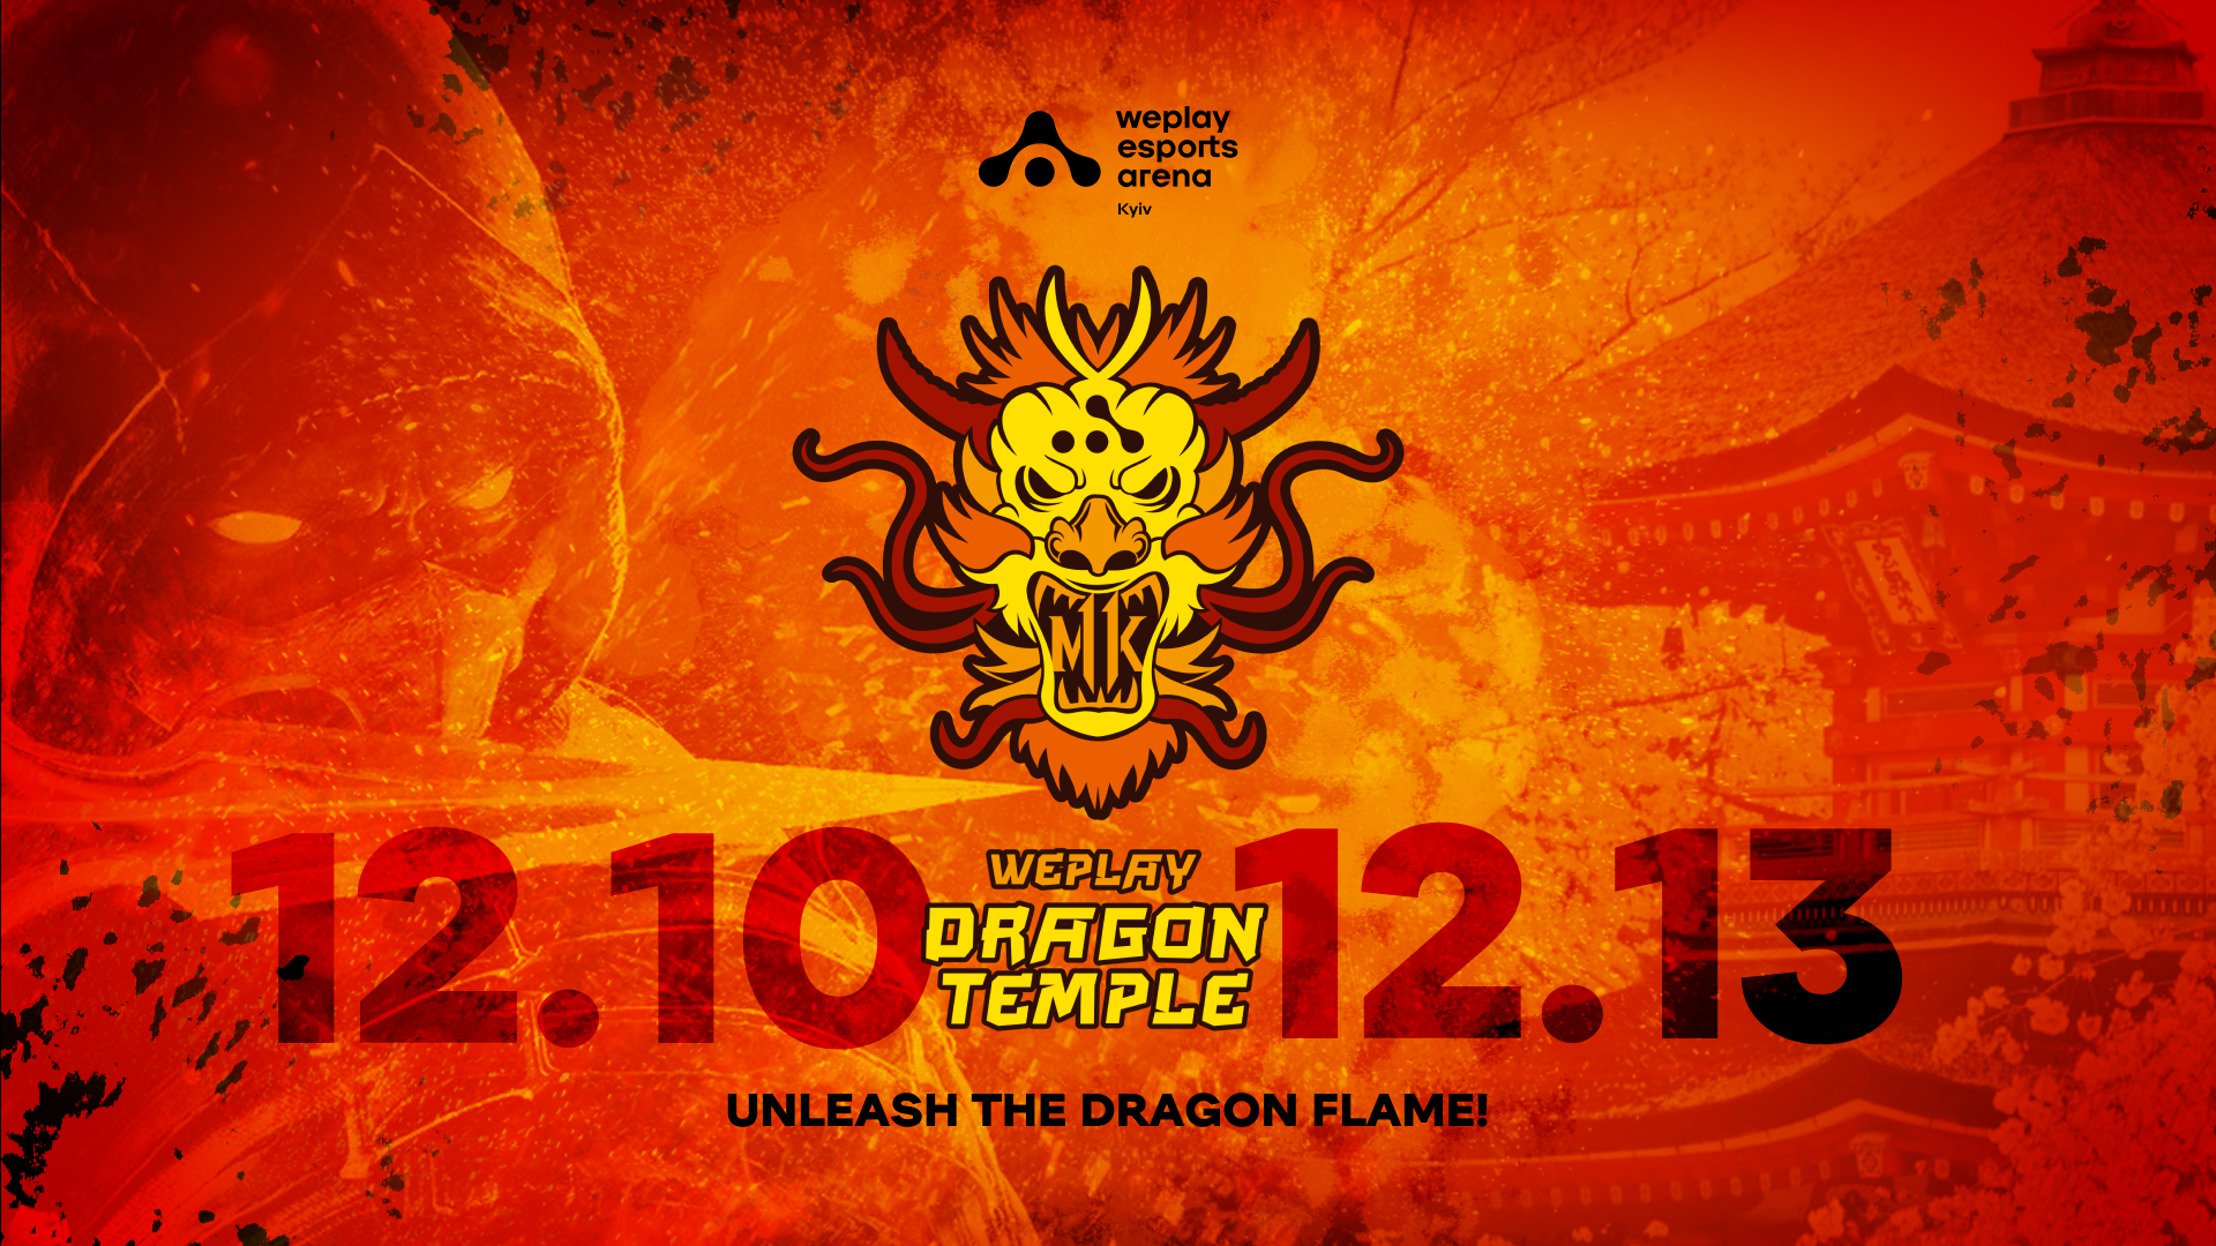 Представляем турнир по Mortal Kombat 11 – WePlay Dragon Temple